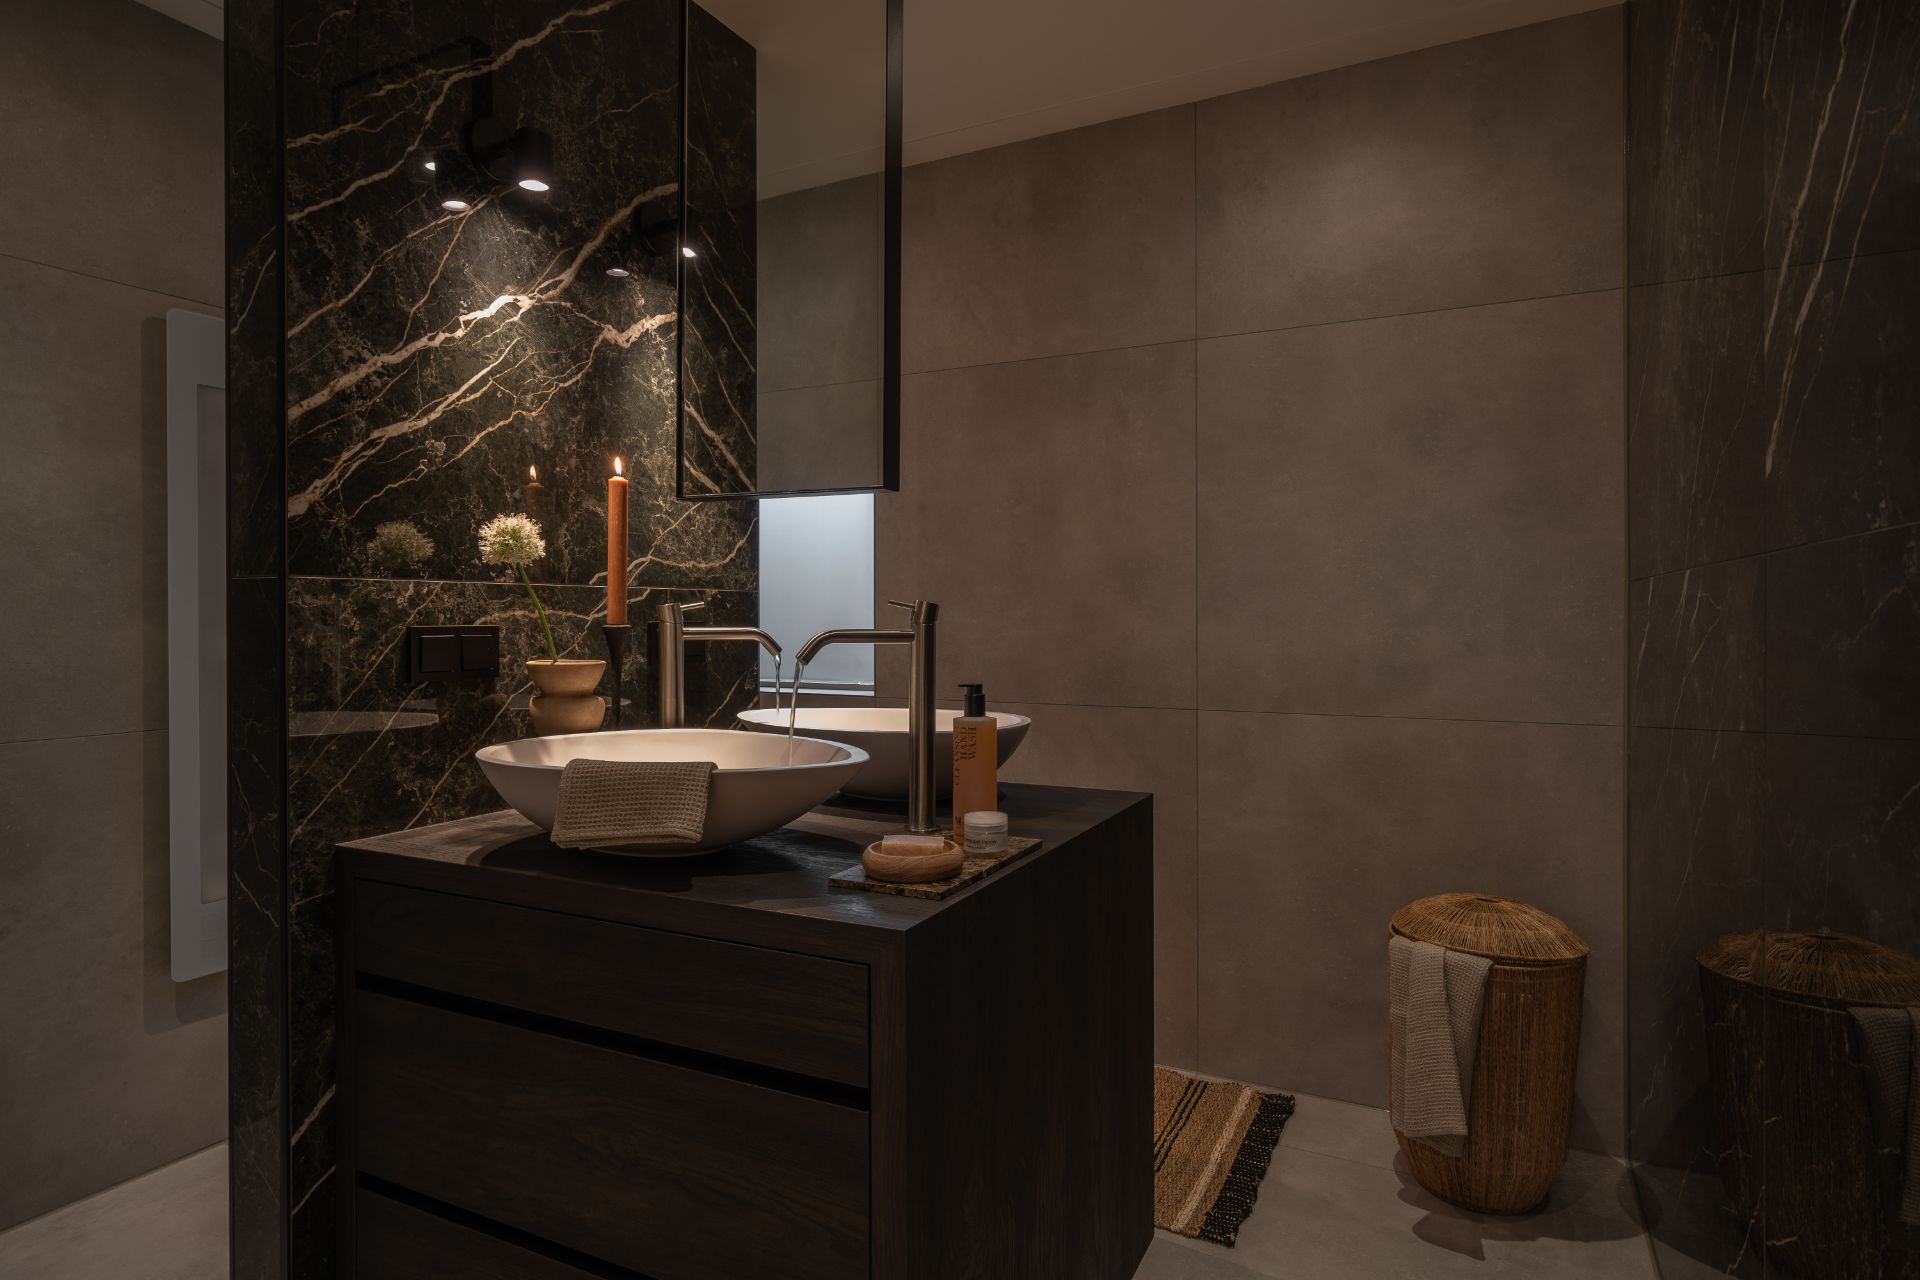 Foto: jaloersmakende  moderne kleine badkamer  eerste kamer badkamers   002